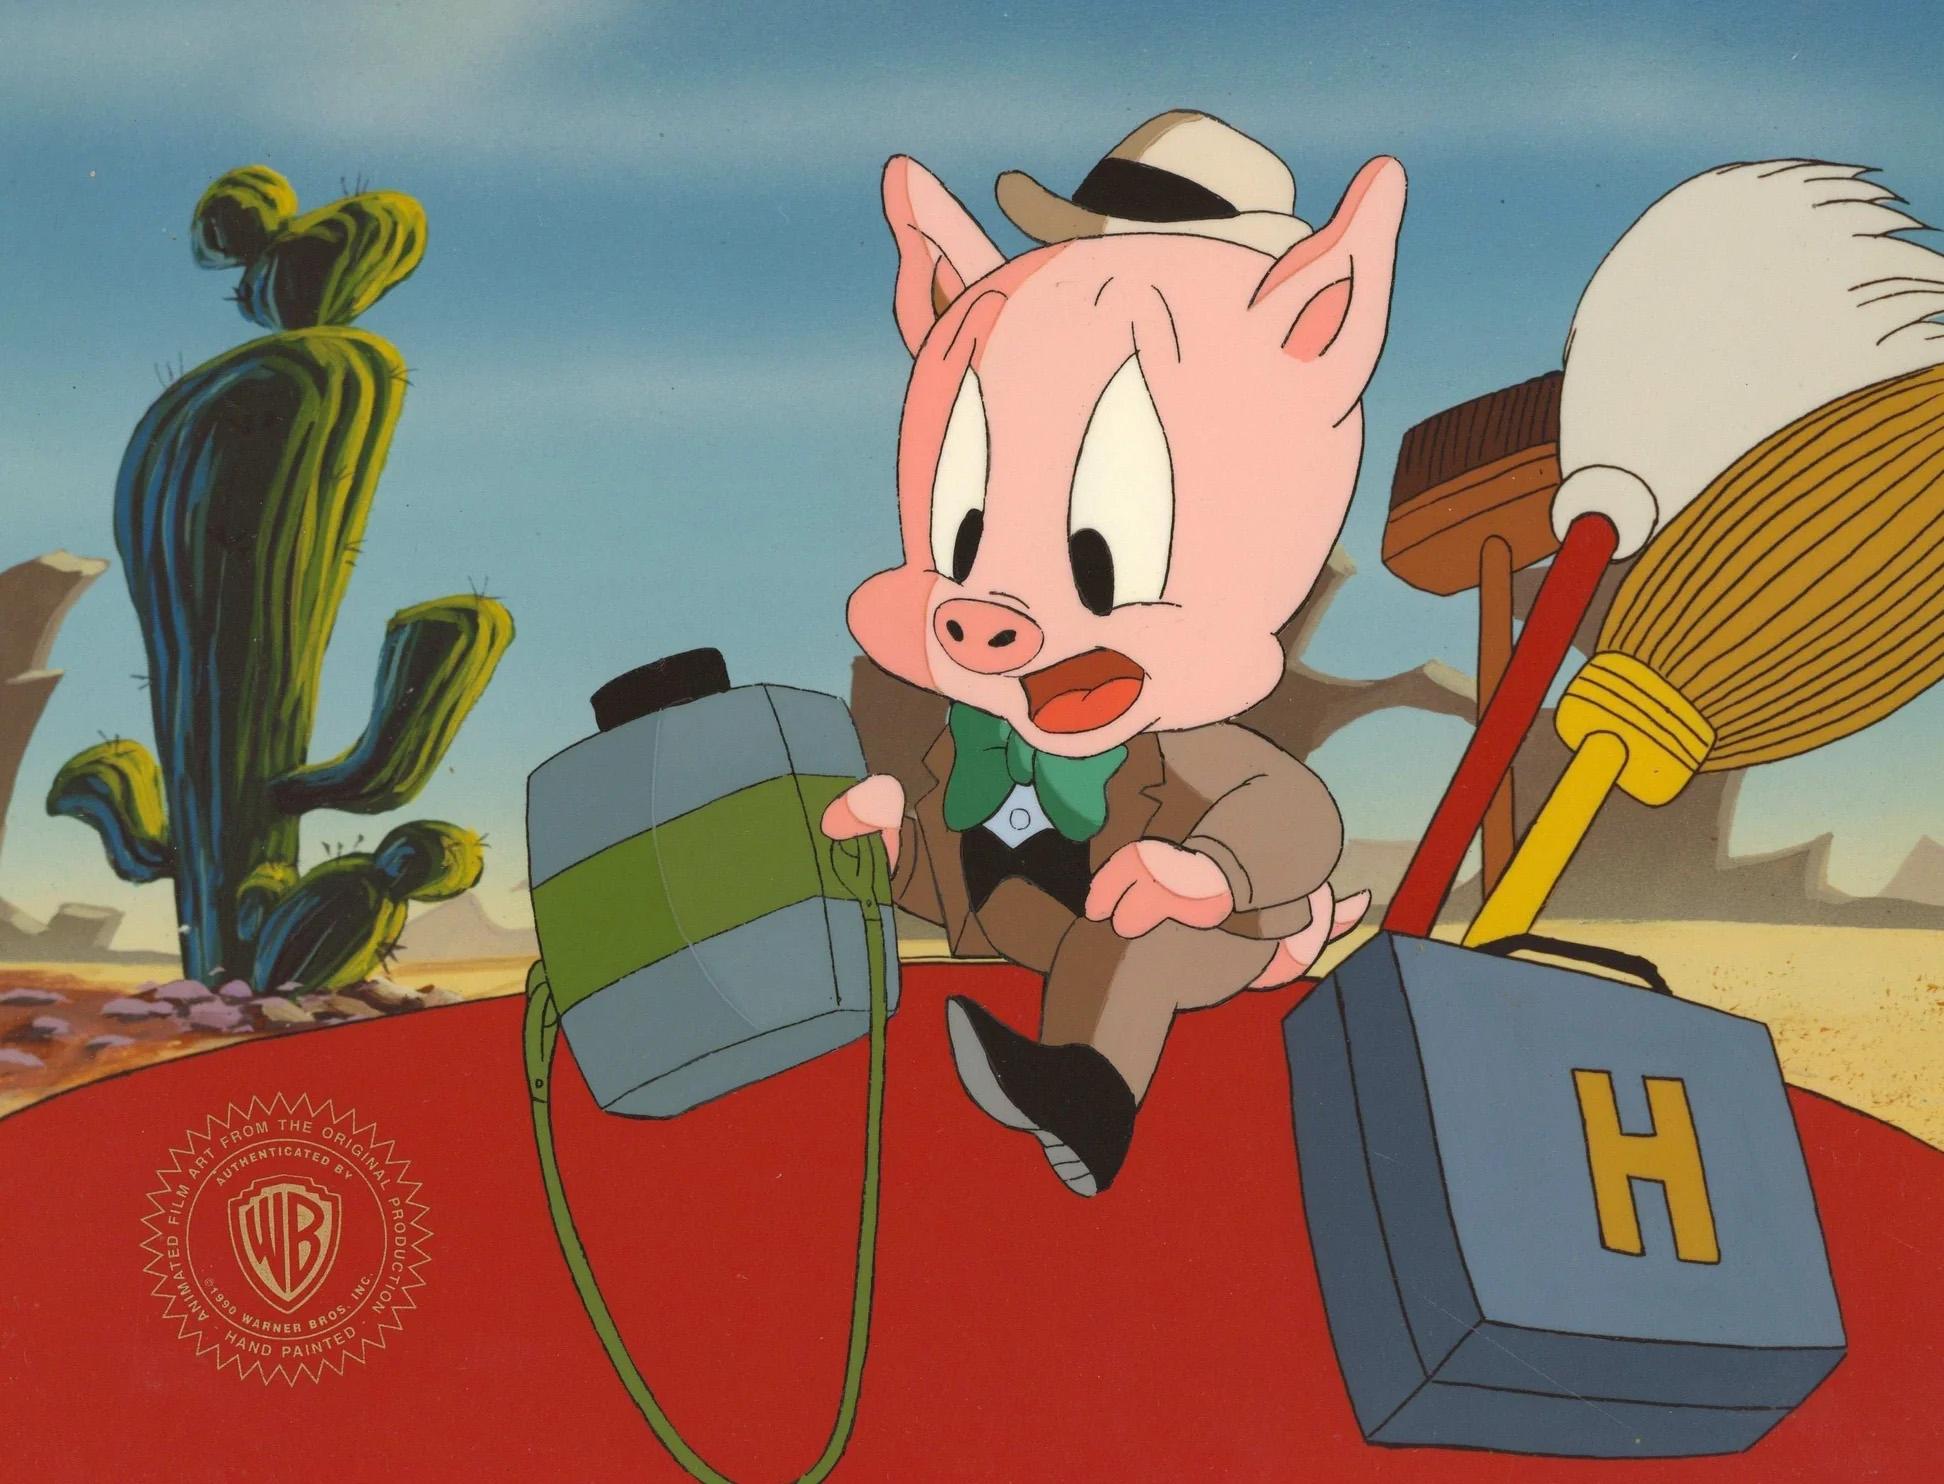 Tiny Toons Original Production Cel: Hamton J. Pig - Art by Warner Bros. Studio Artists